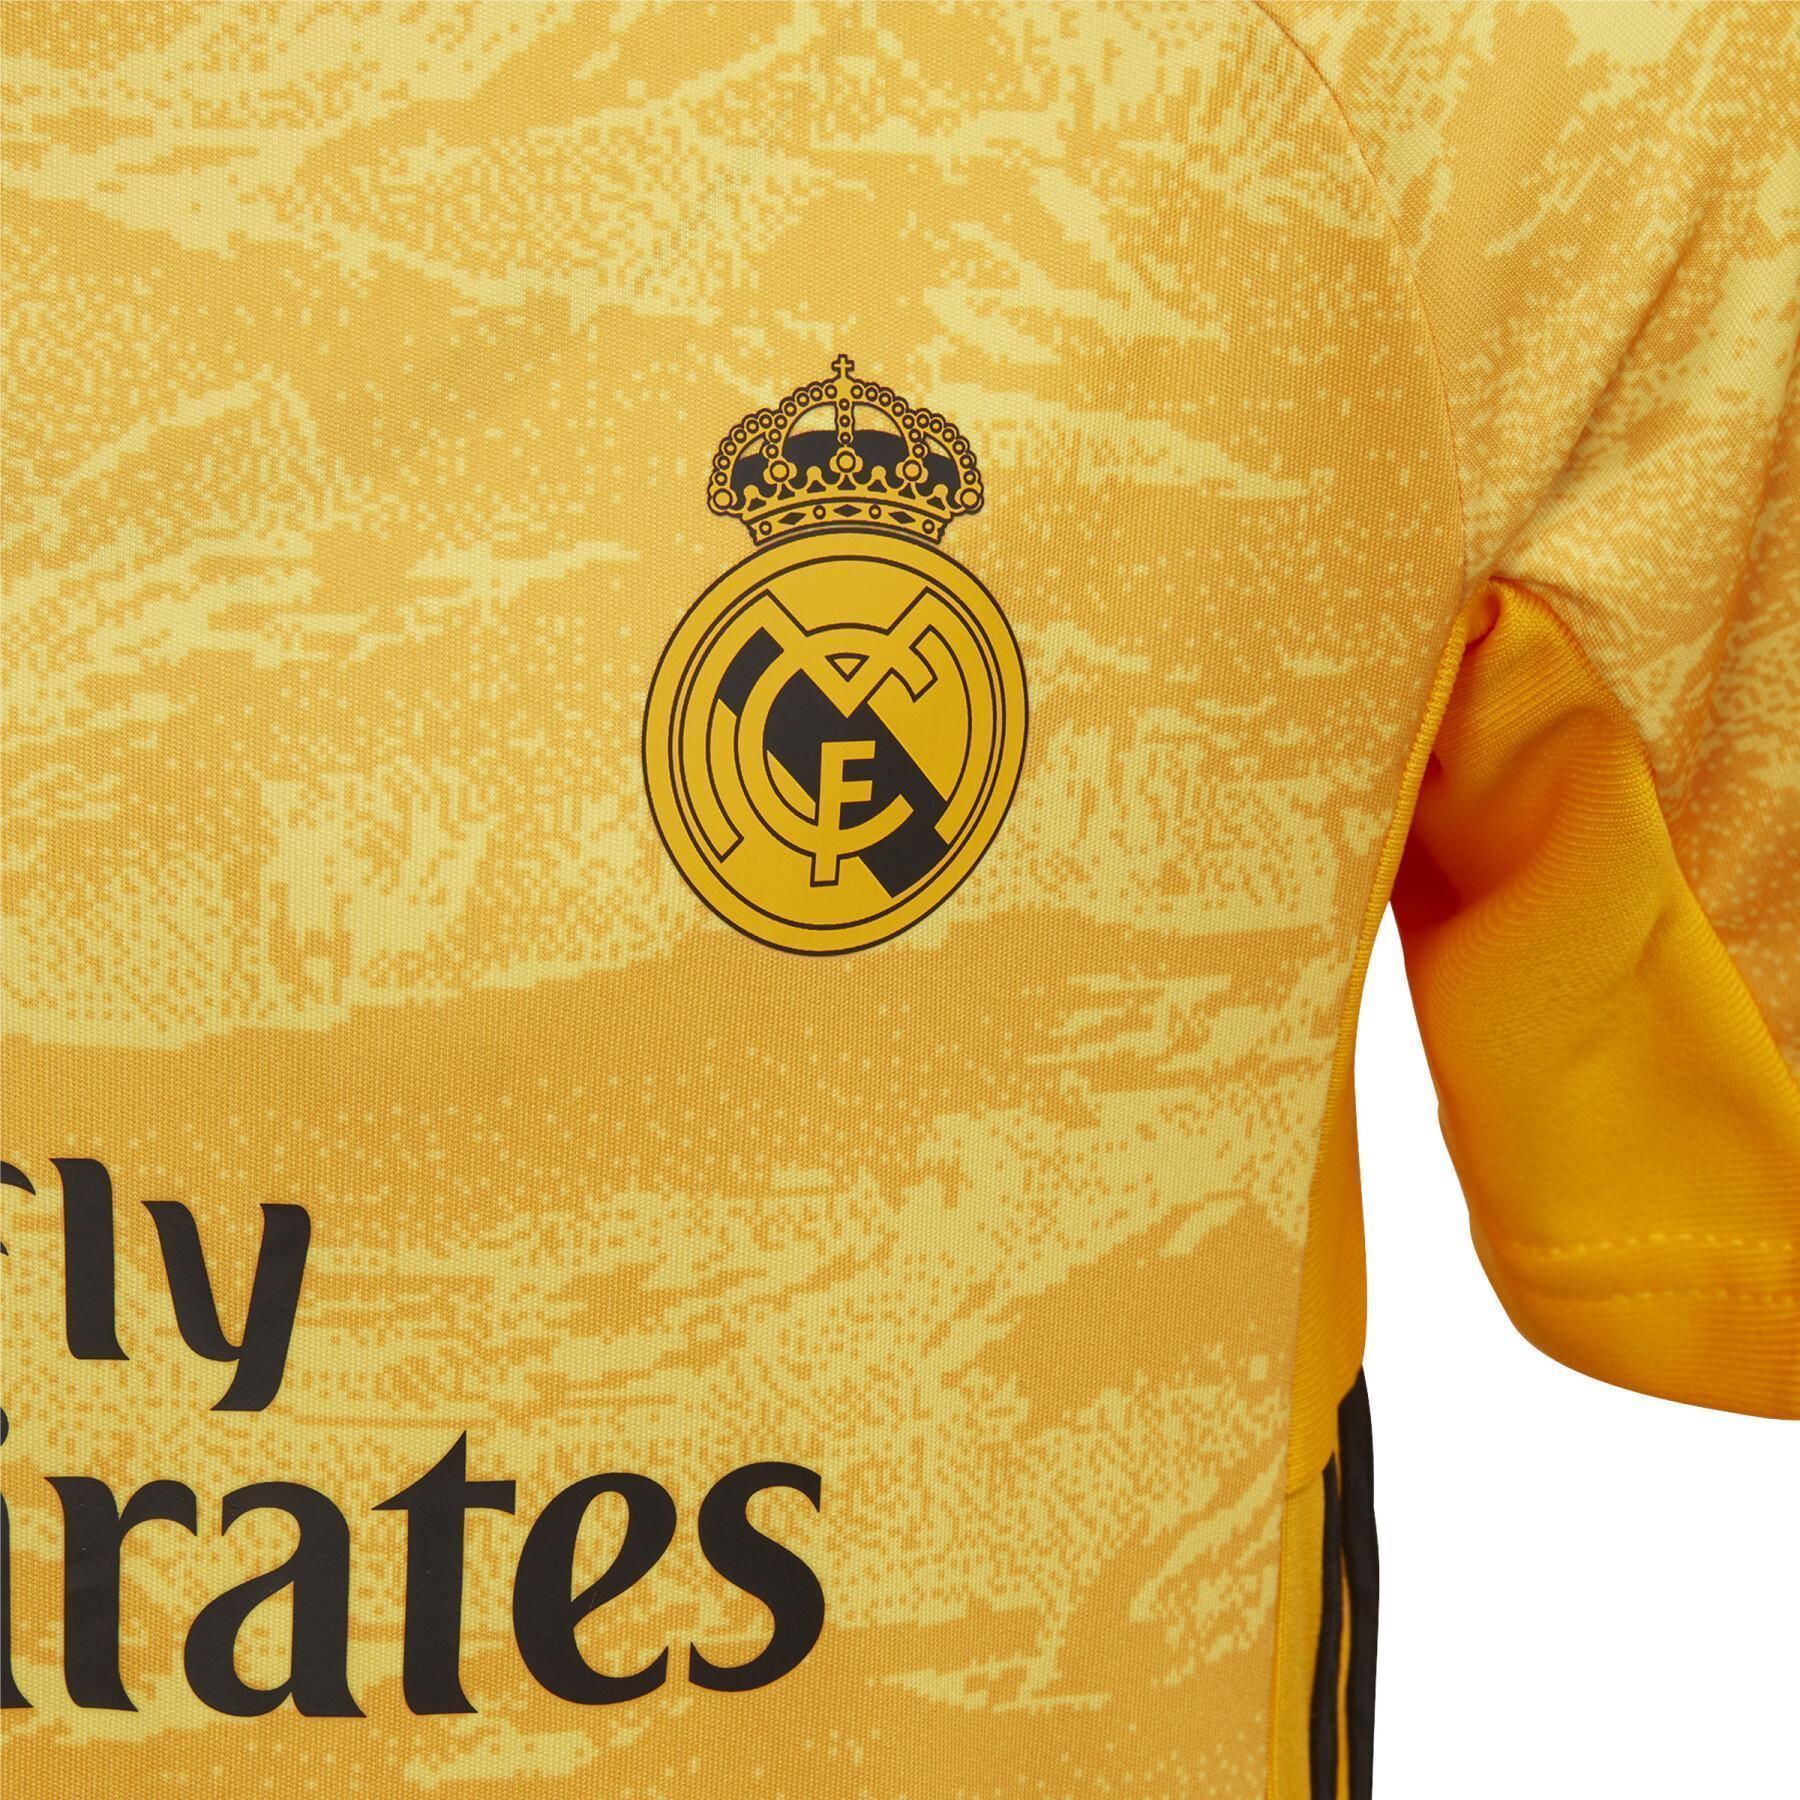 Mini kit per la casa Real Madrid Goalkeeper 2019/20